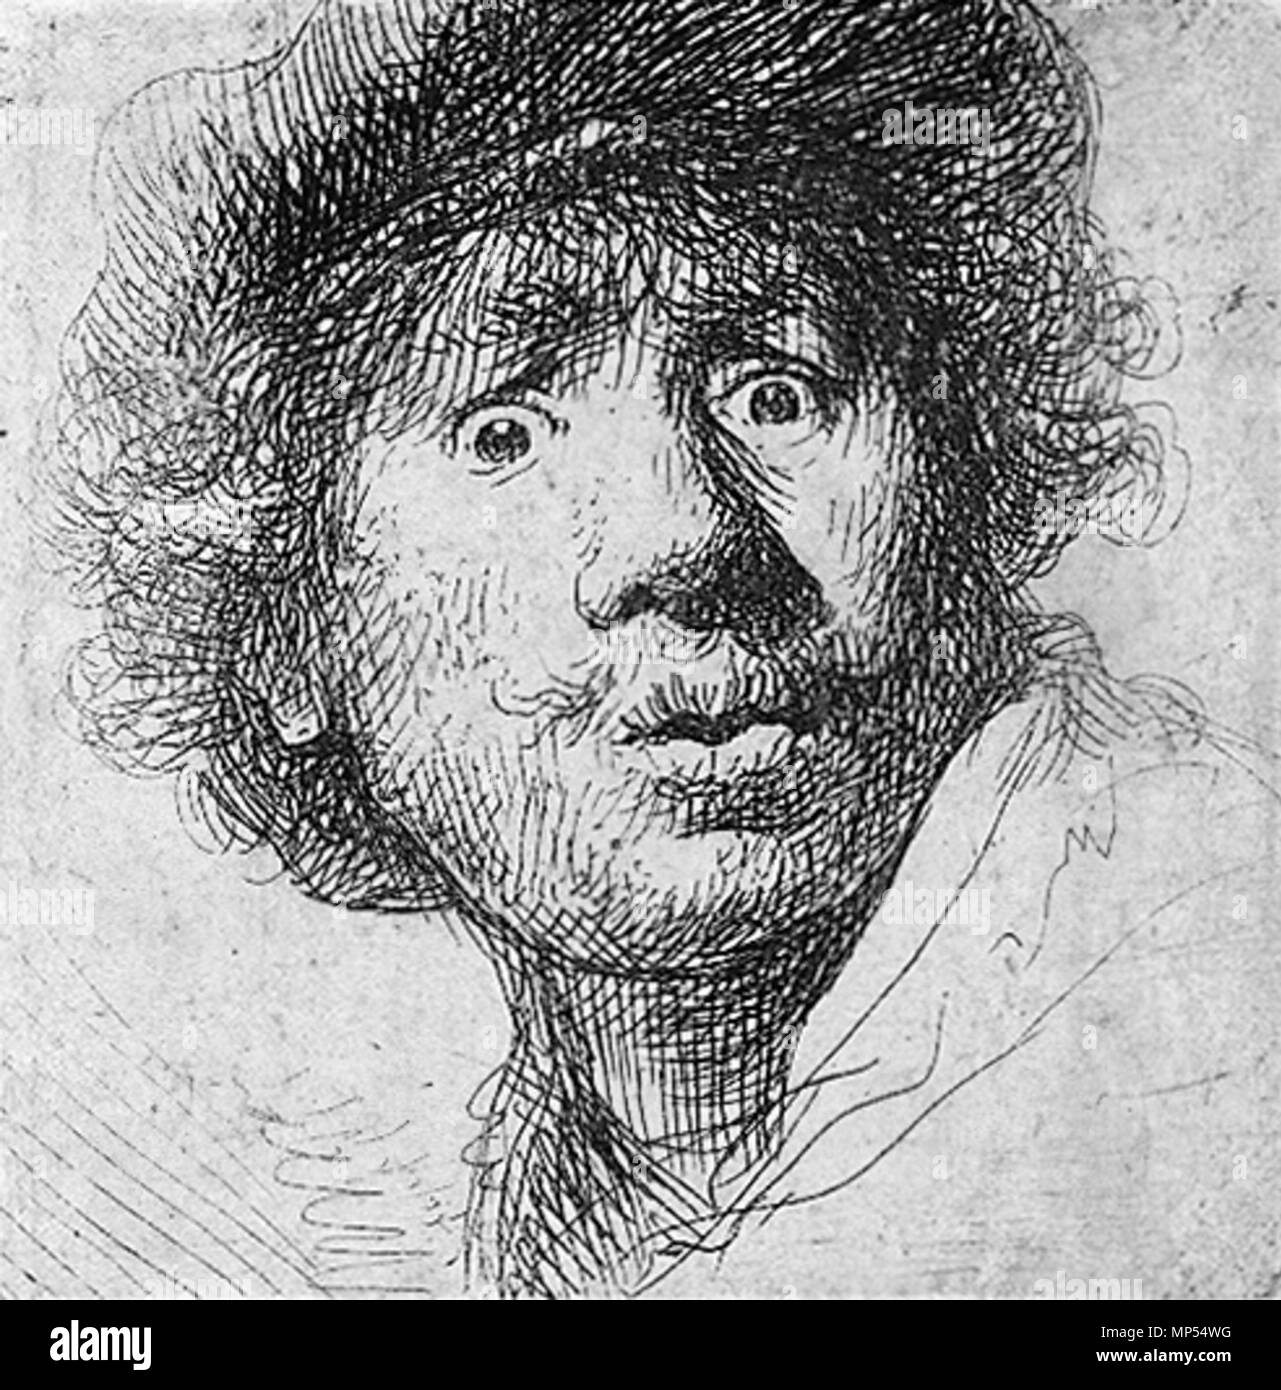 98 Self-Portrait, Staring, detail 1630. 1050 Rembrandt aux yeux hagards  Stock Photo - Alamy